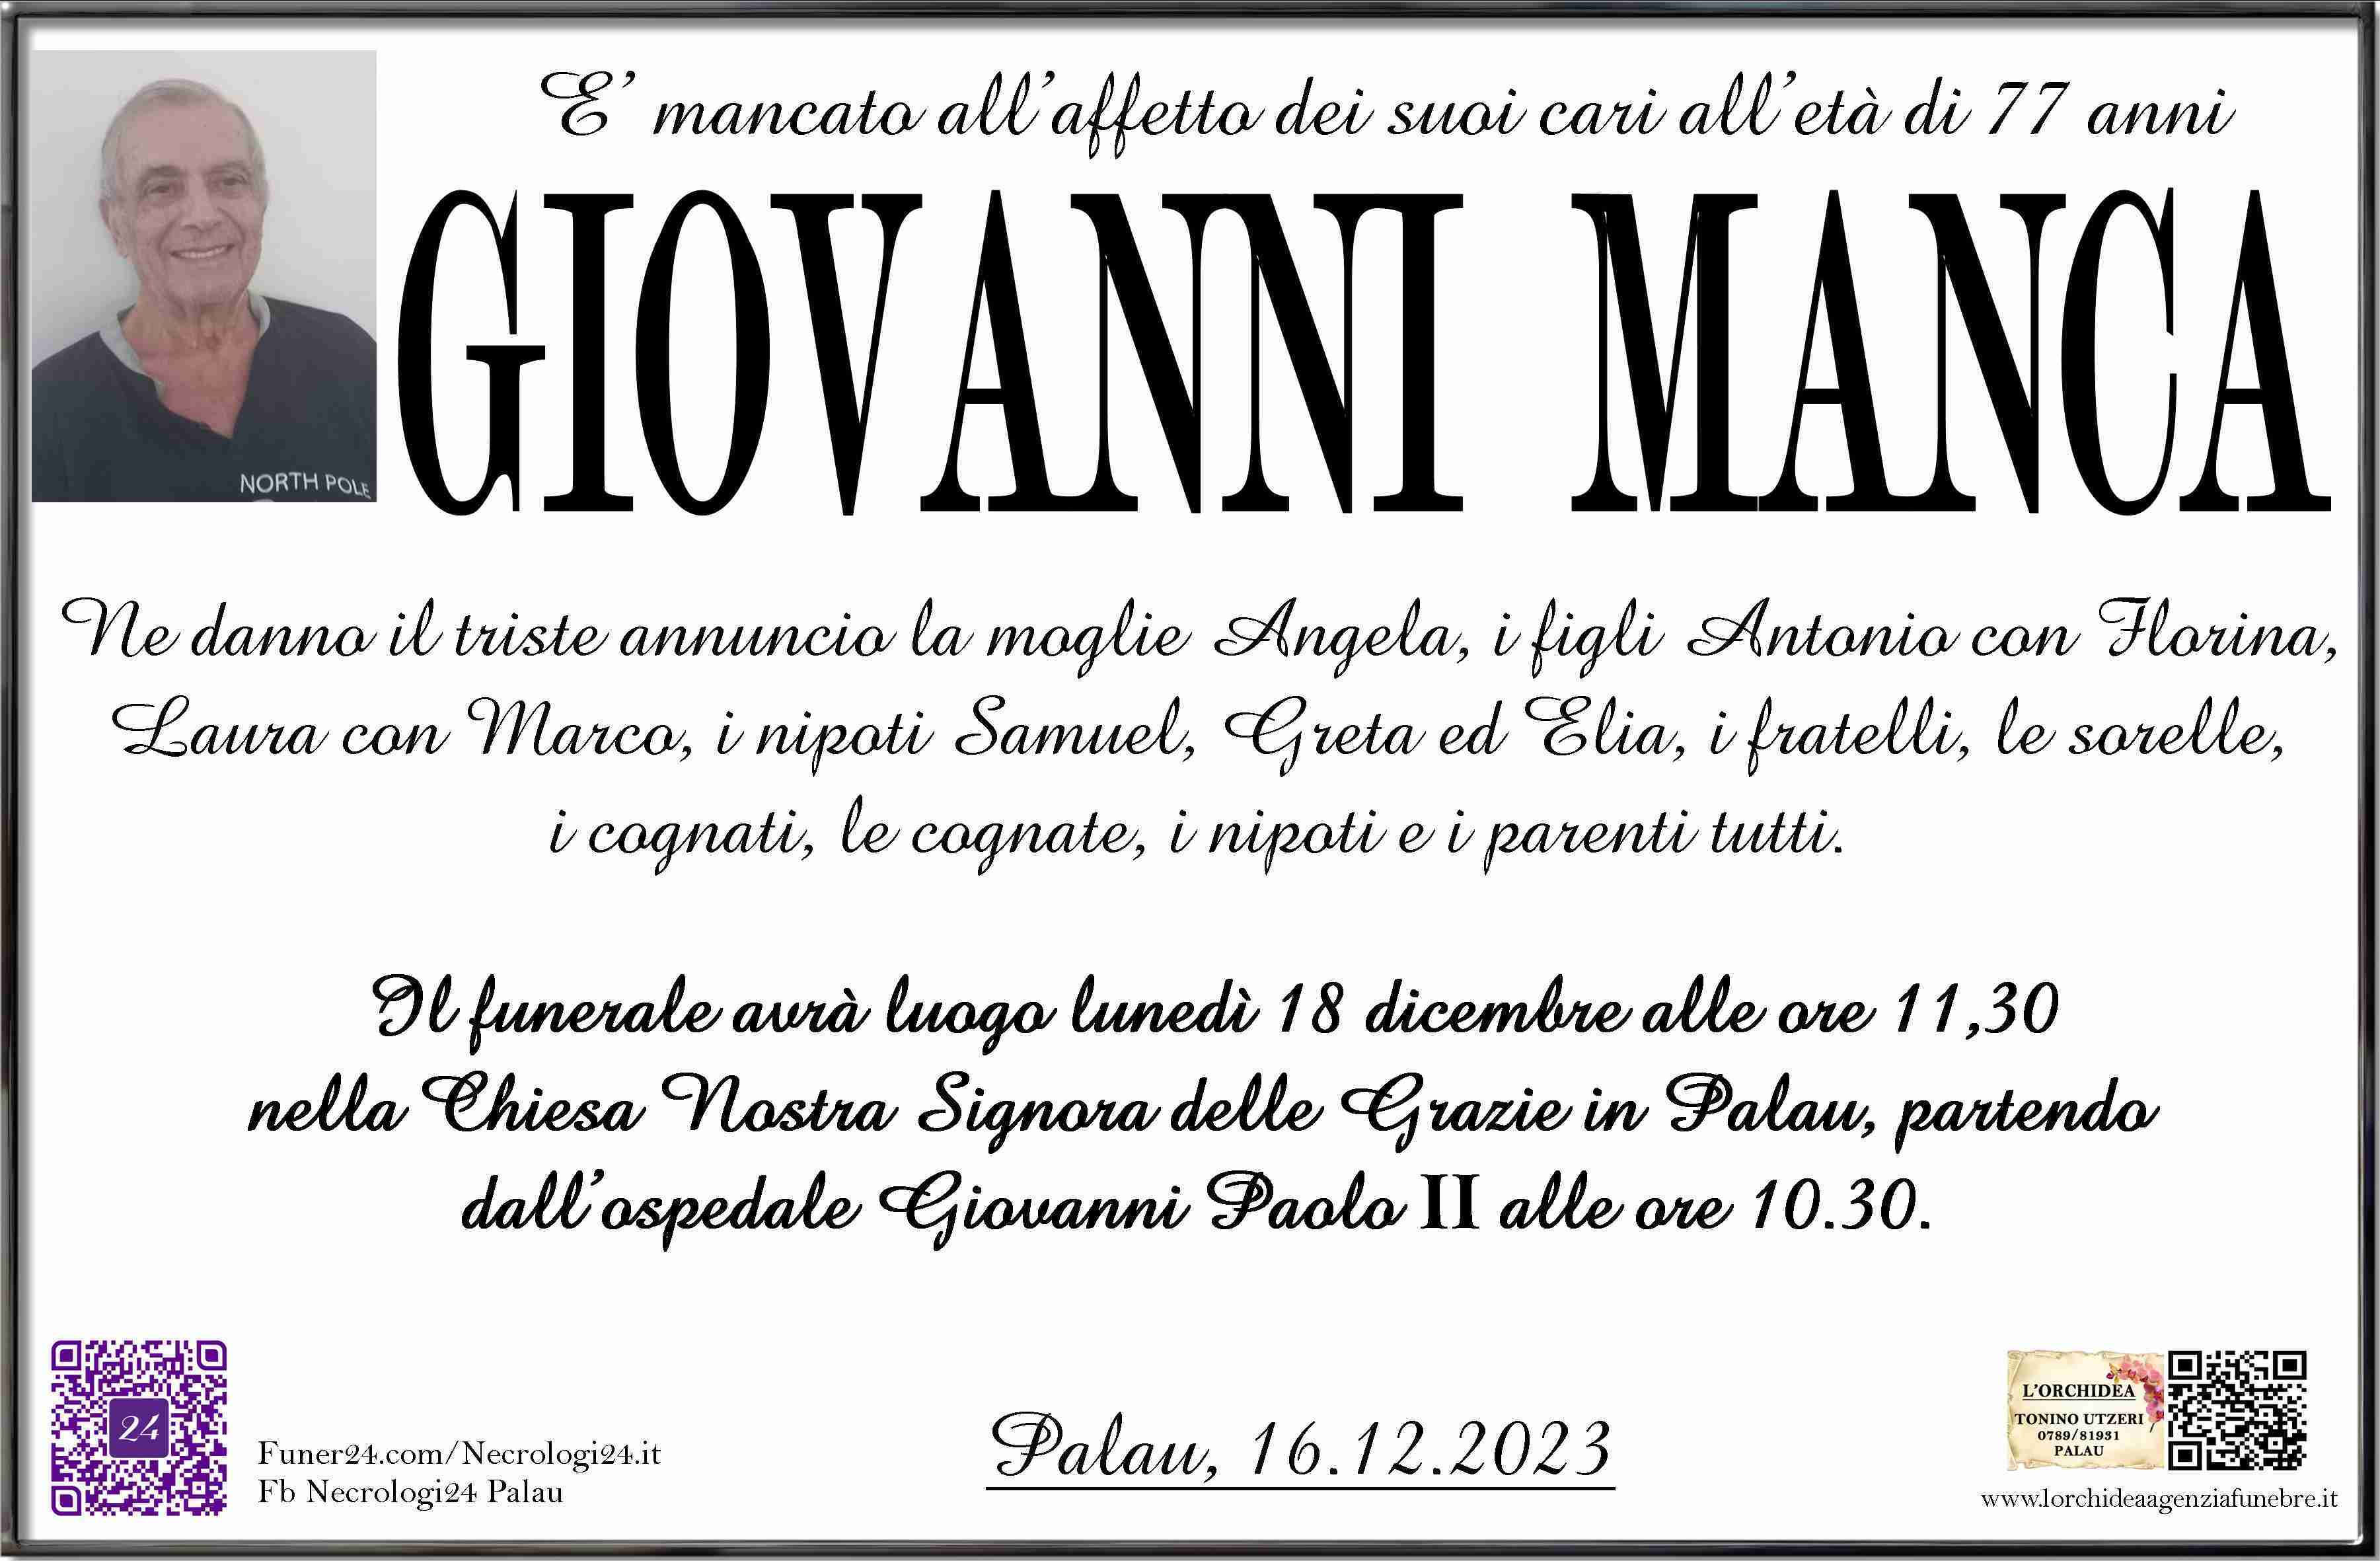 Giovanni Manca